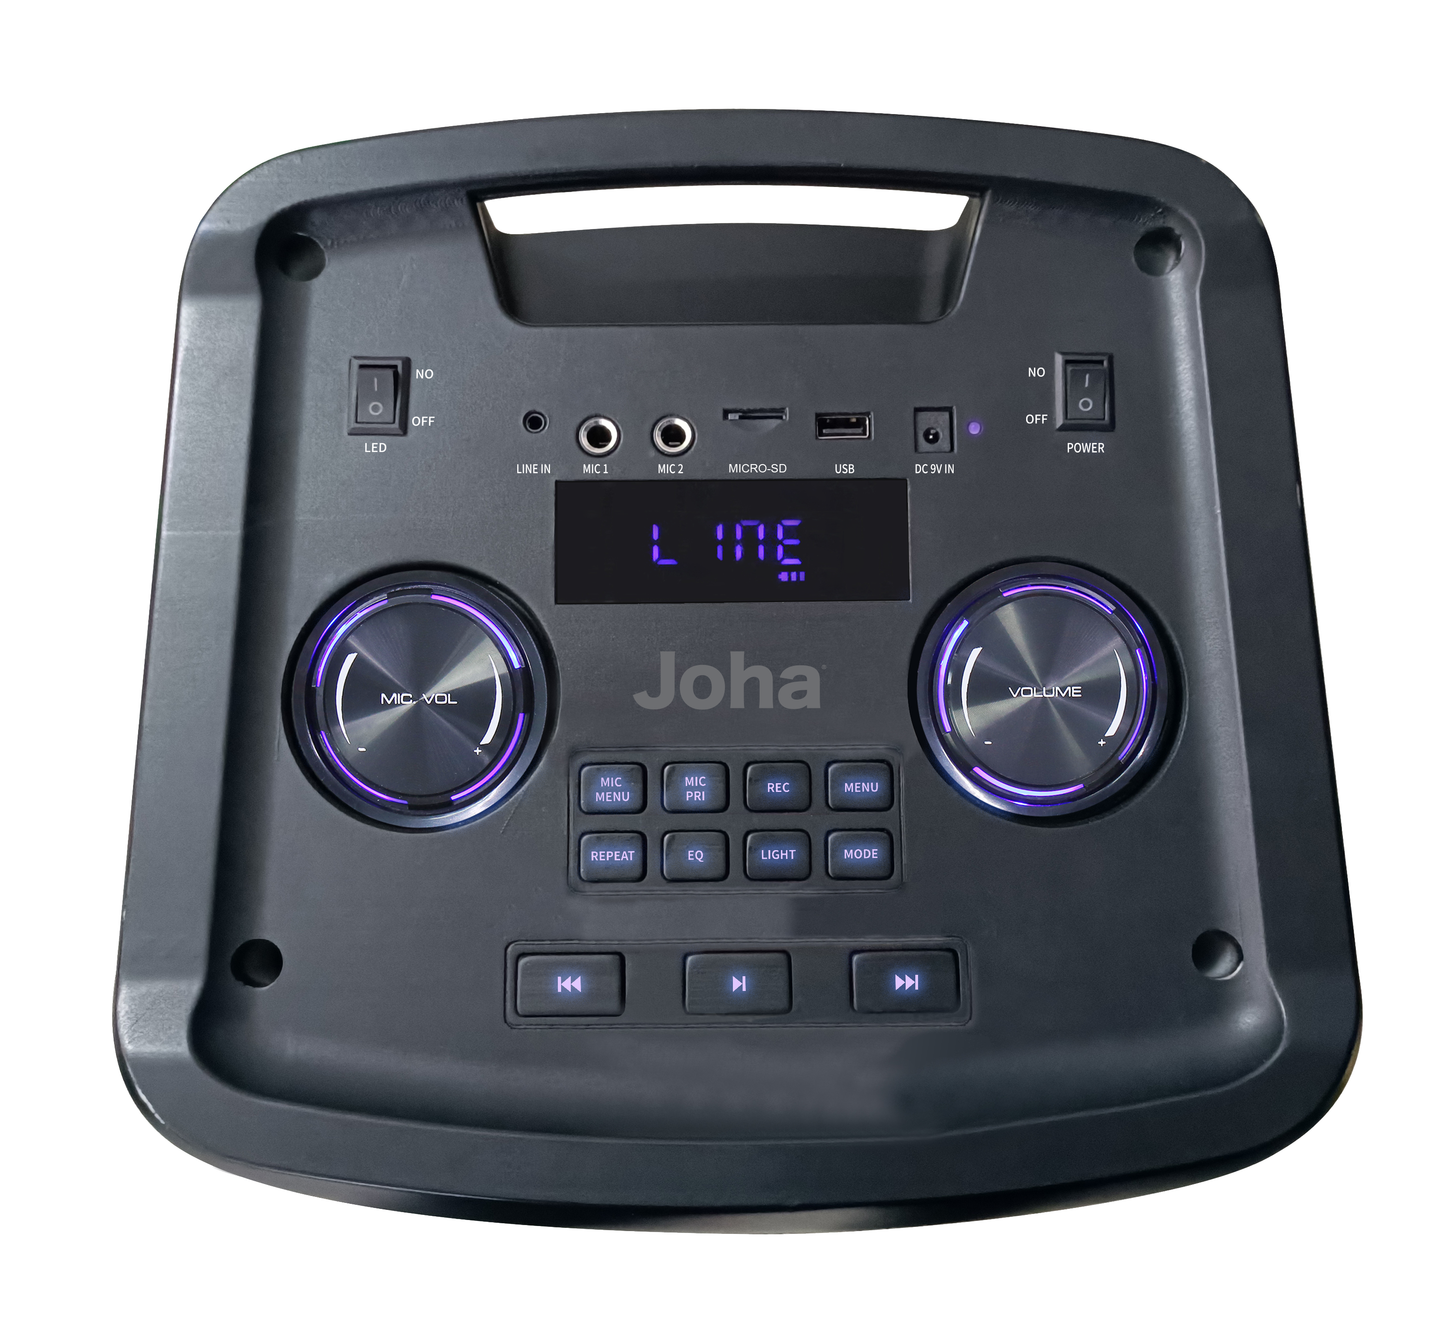 Joha Wireless Speaker (JOHA-2010) [18000 W. PMPO]